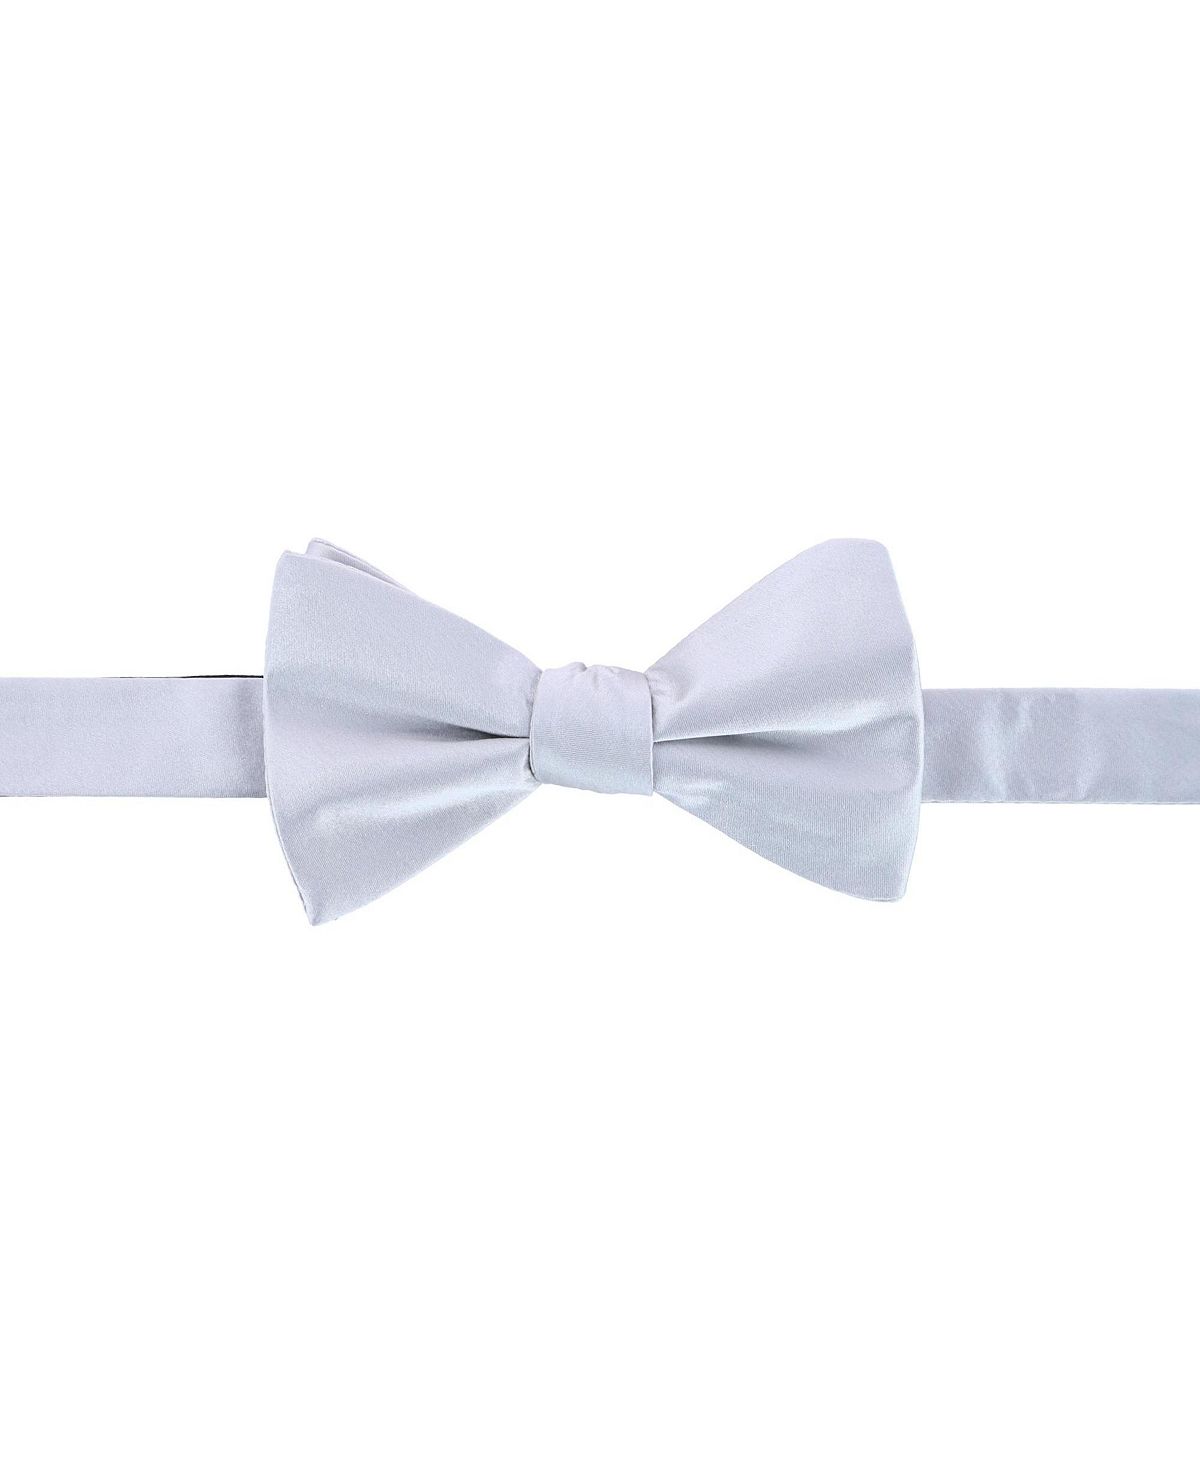 Однотонный шелковый галстук-бабочка Sutton TRAFALGAR мужской галстук бабочка с открытым бантом однотонный галстук бабочка 2019